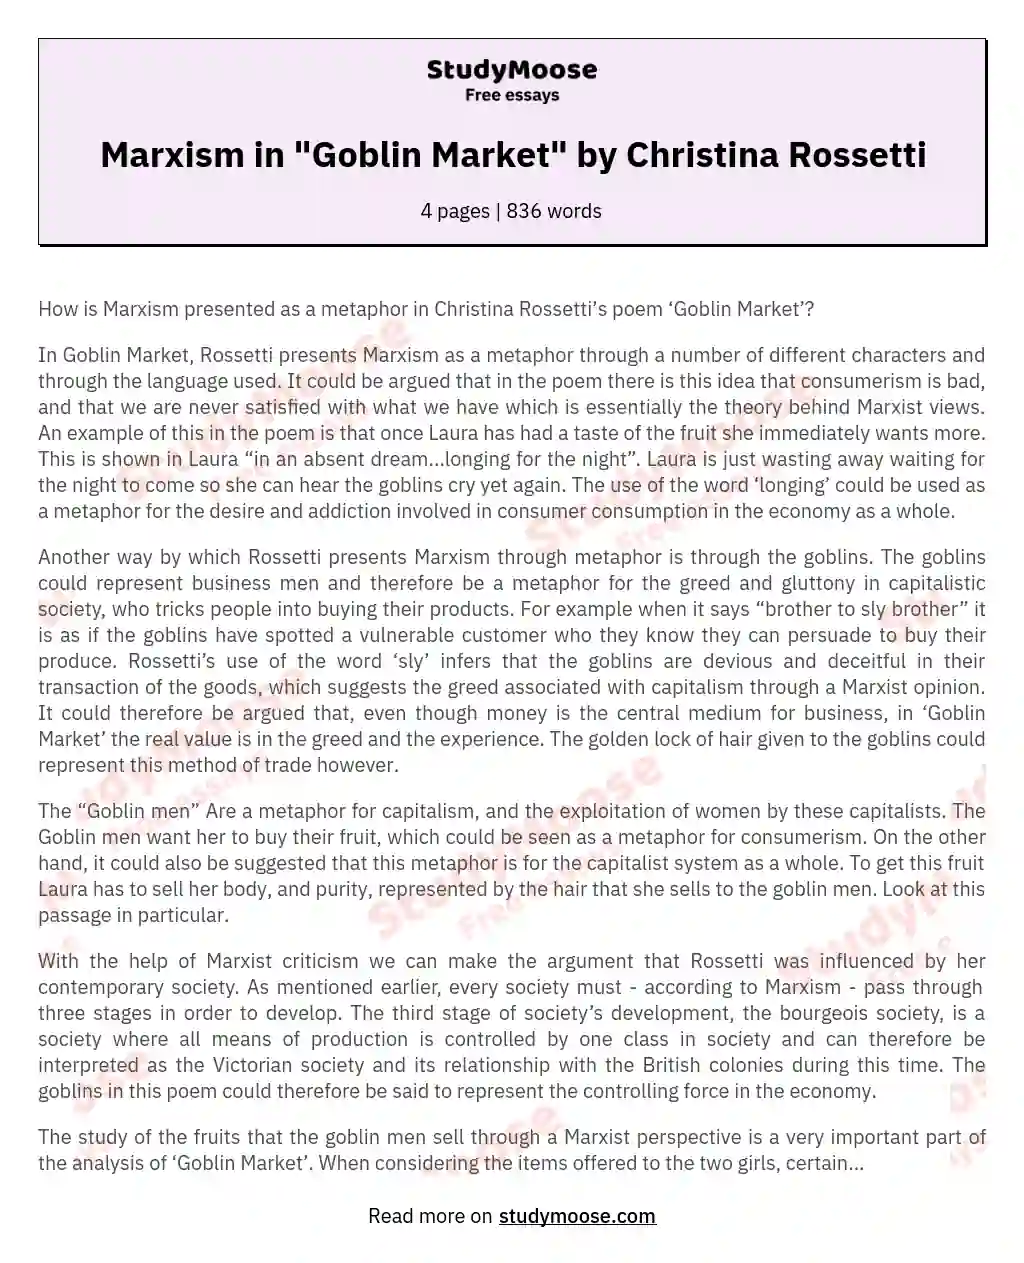 Marxism in "Goblin Market" by Christina Rossetti essay